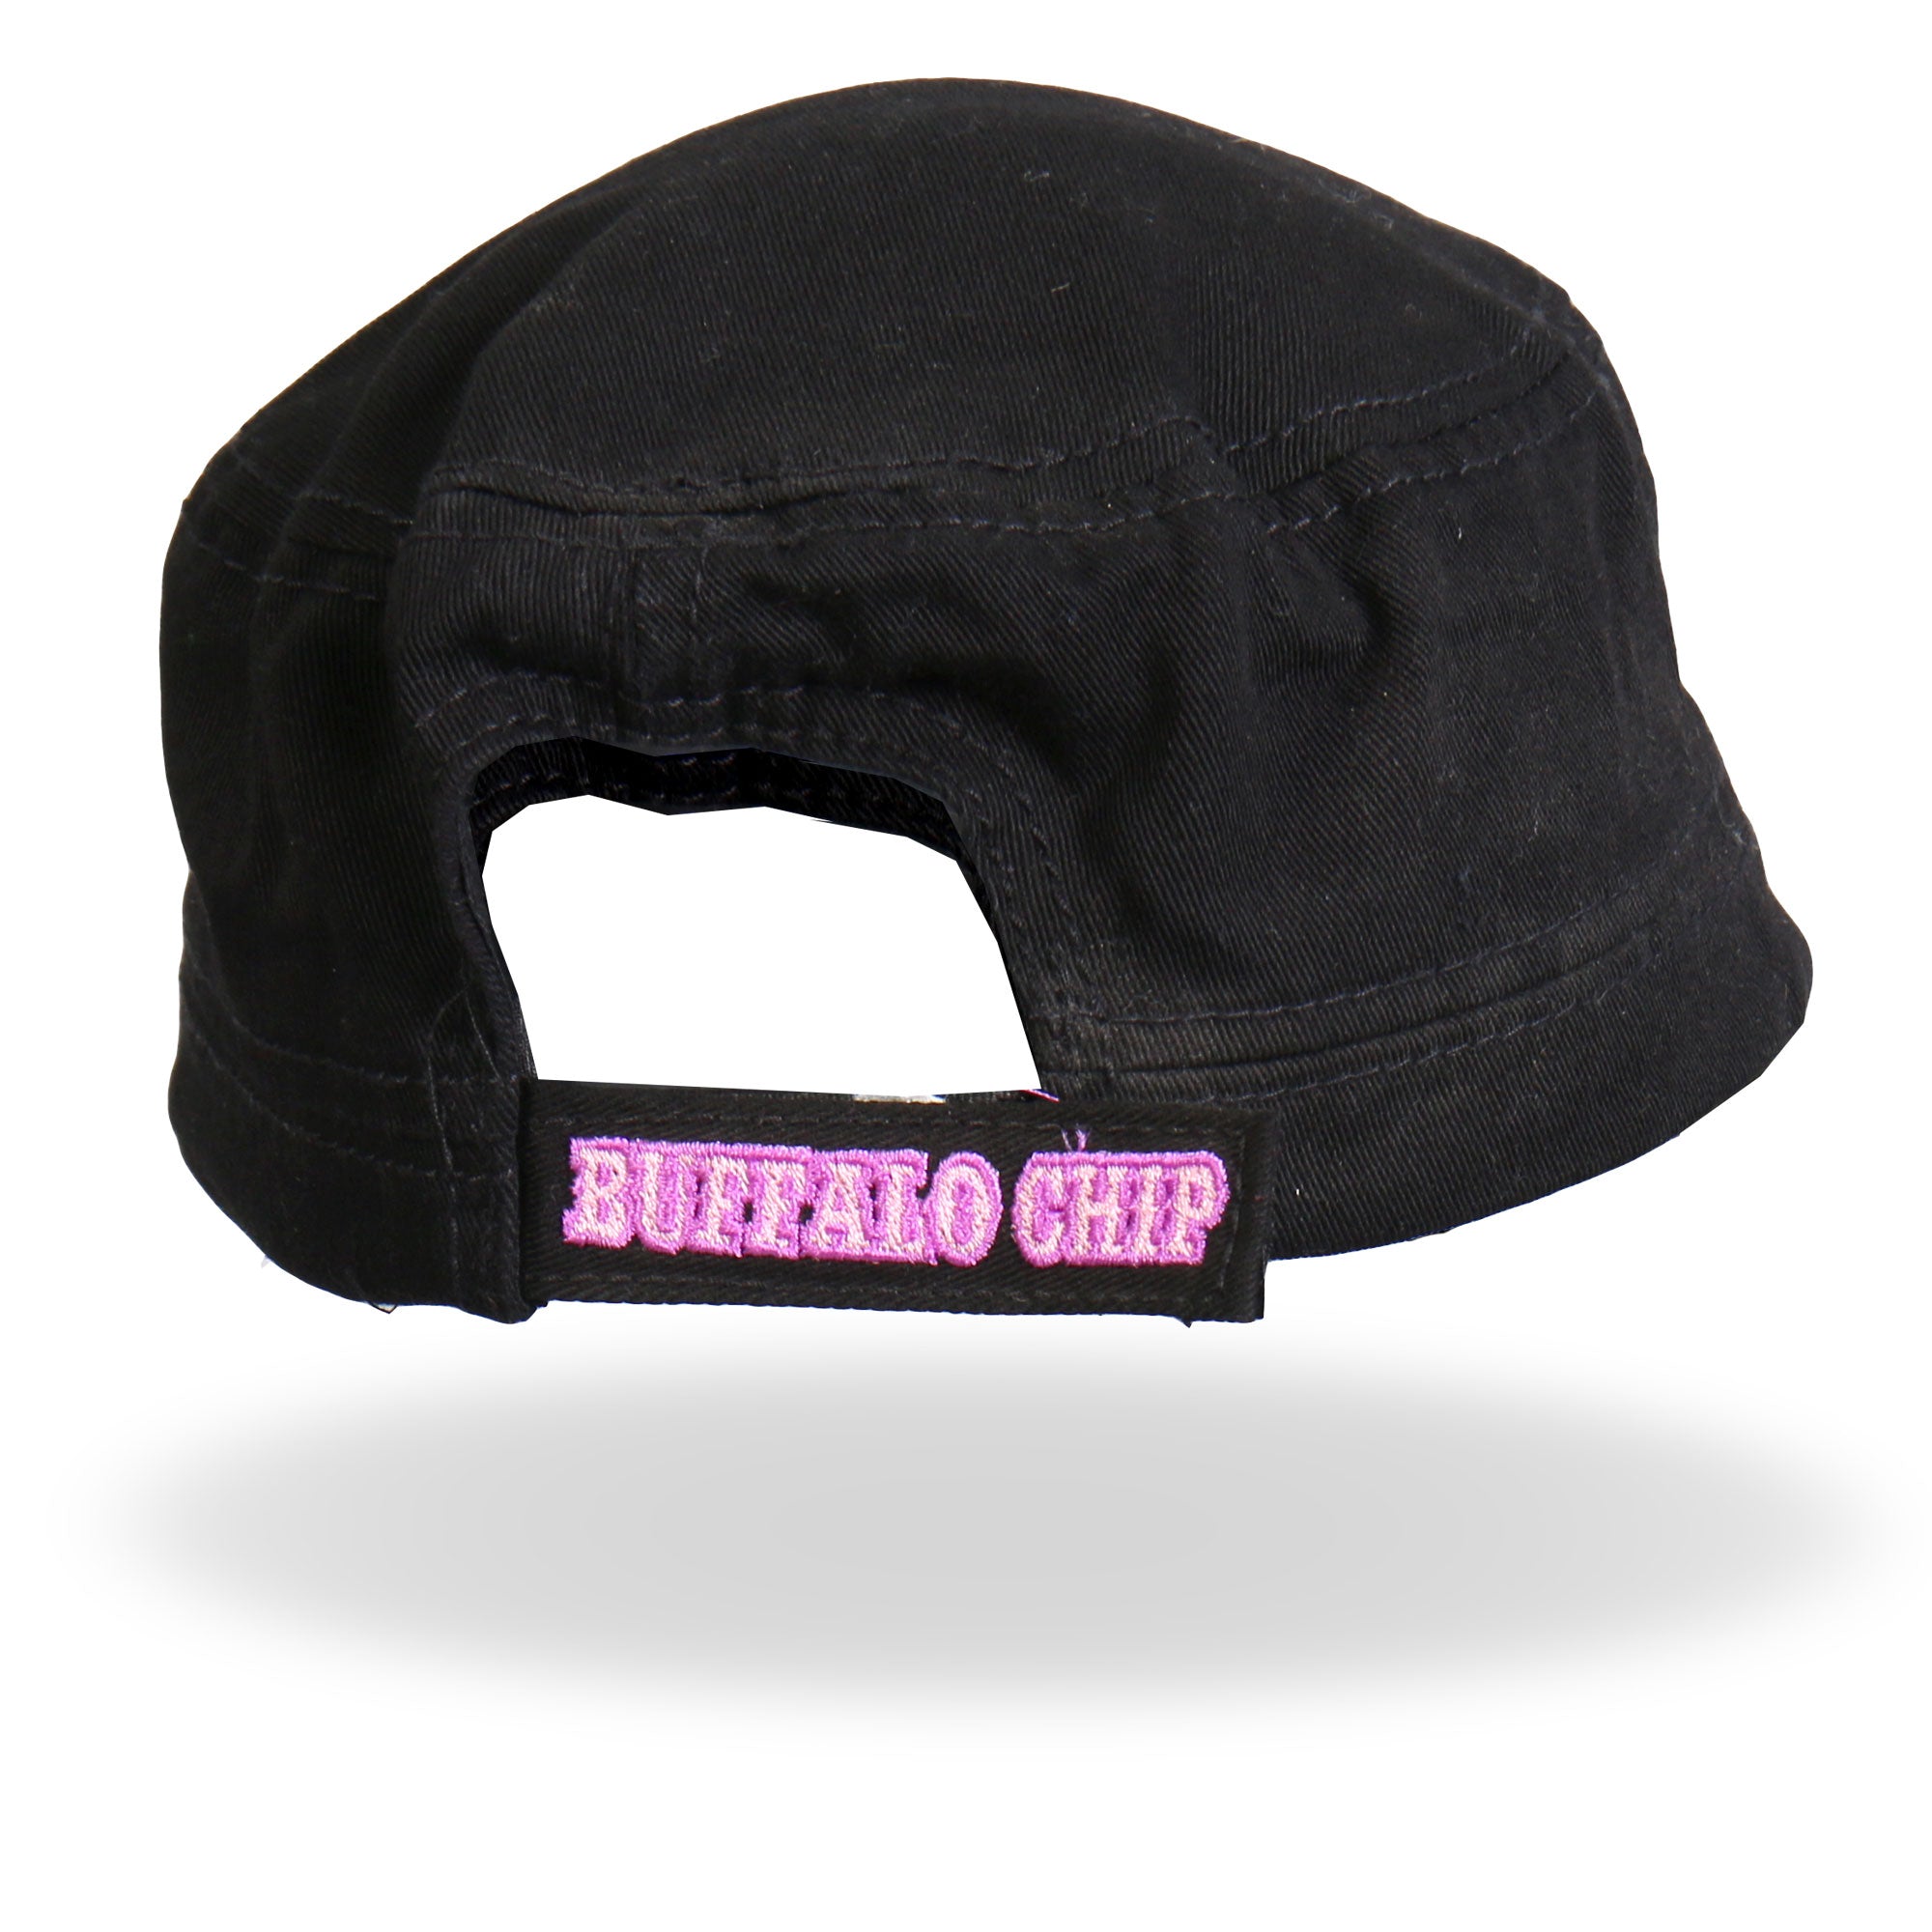 Official Sturgis Buffalo Chip Oval Logo Cadet Cap